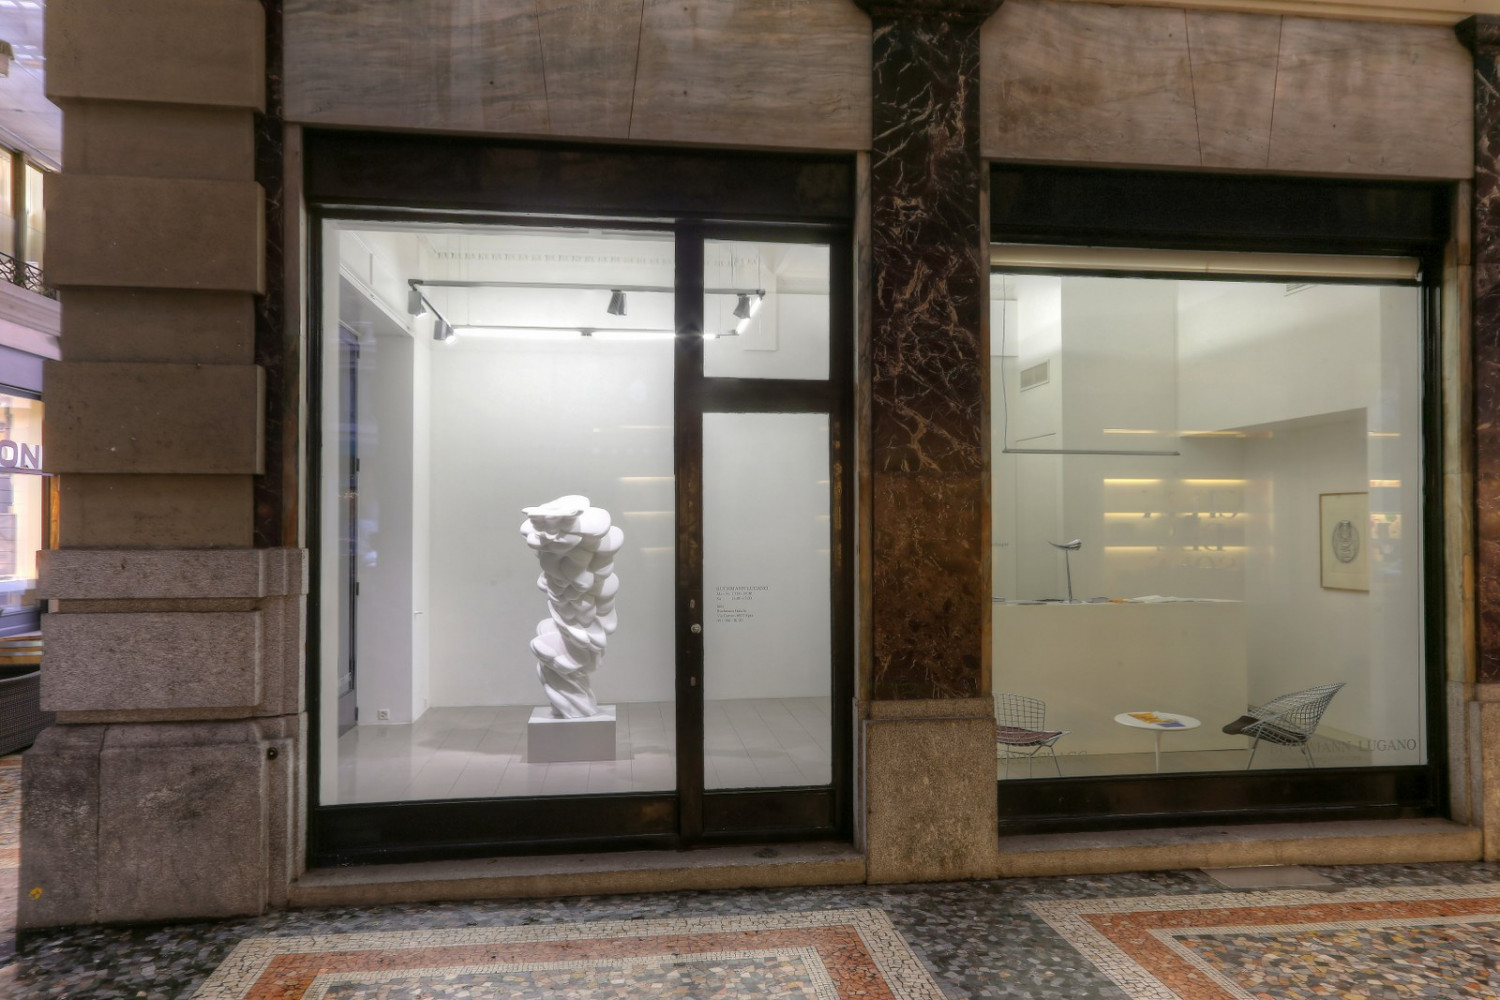 Tony Cragg, Installation view, Buchmann Lugano, 2015